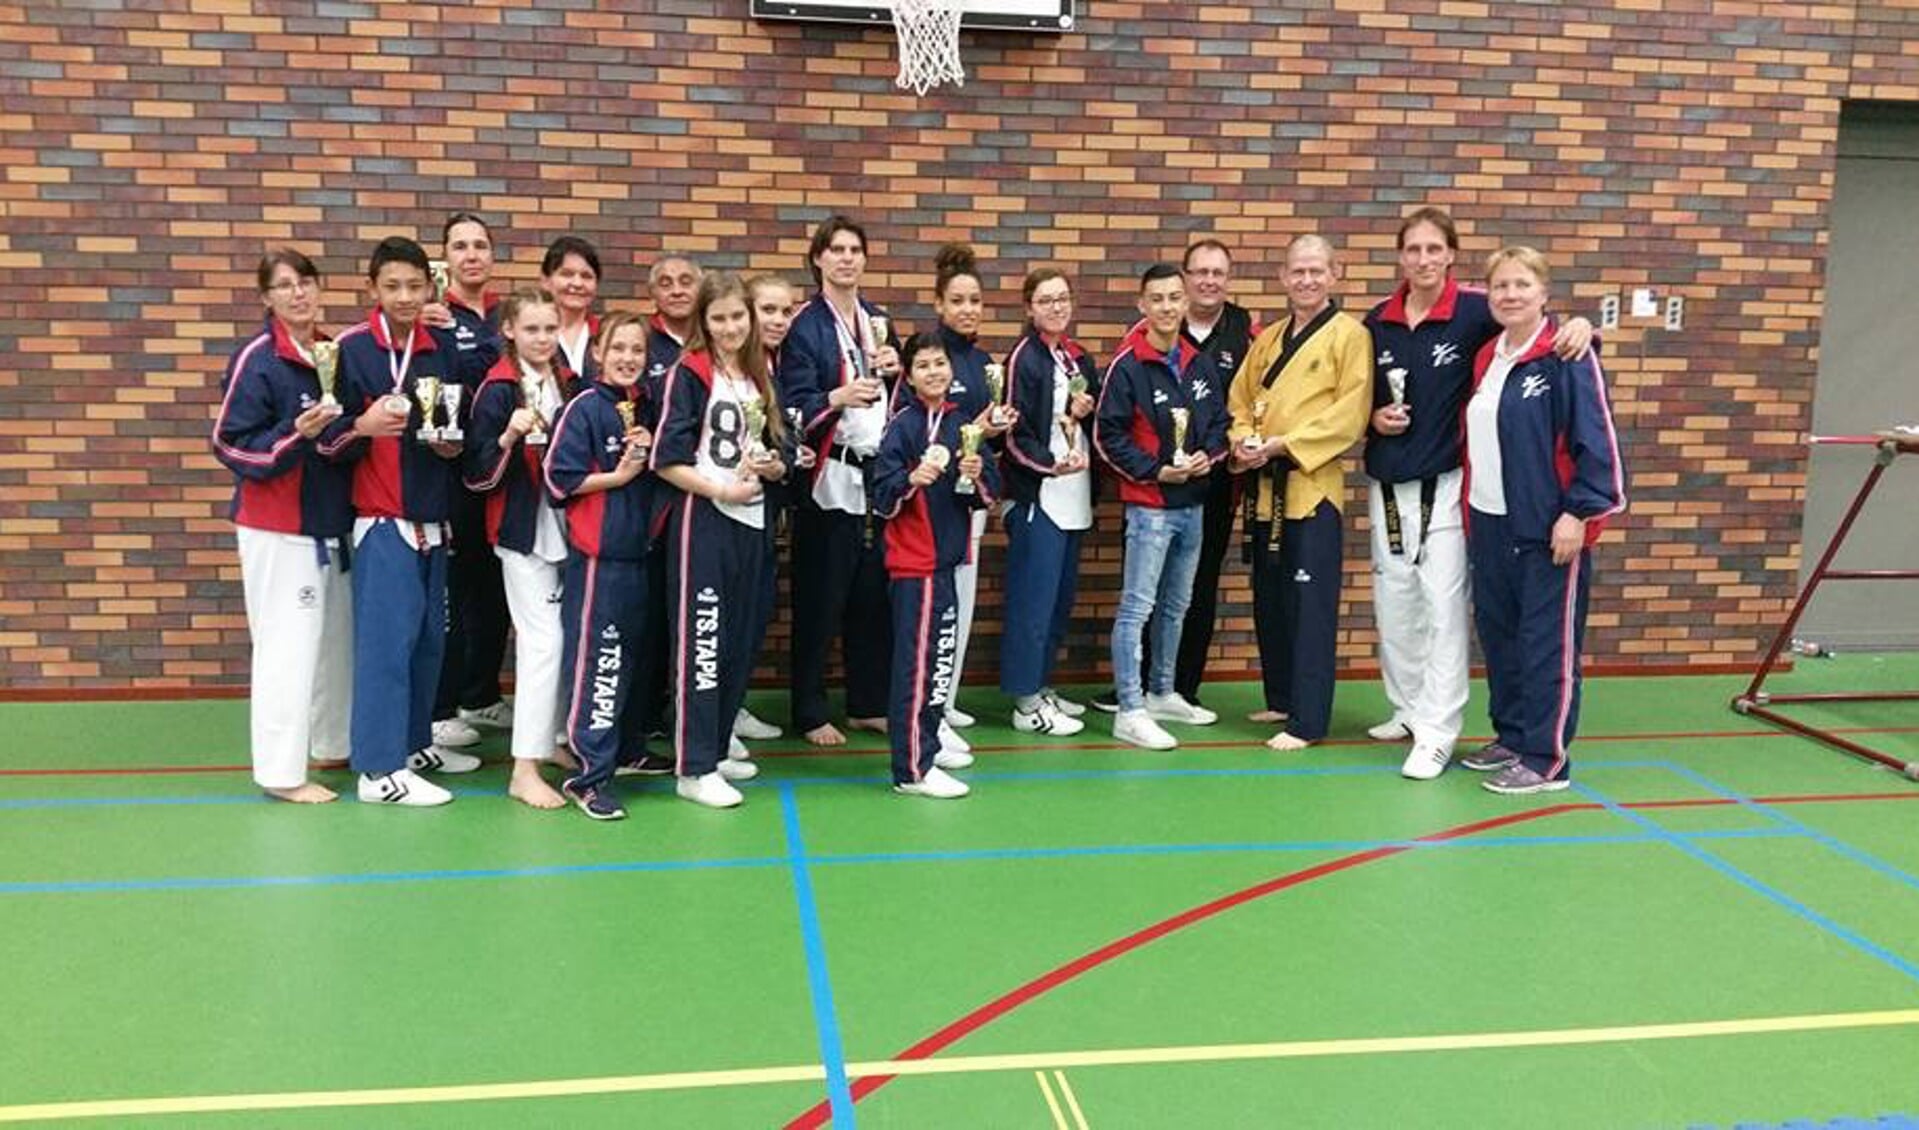 Taekwondoschool Tapia pakt veel medailles.